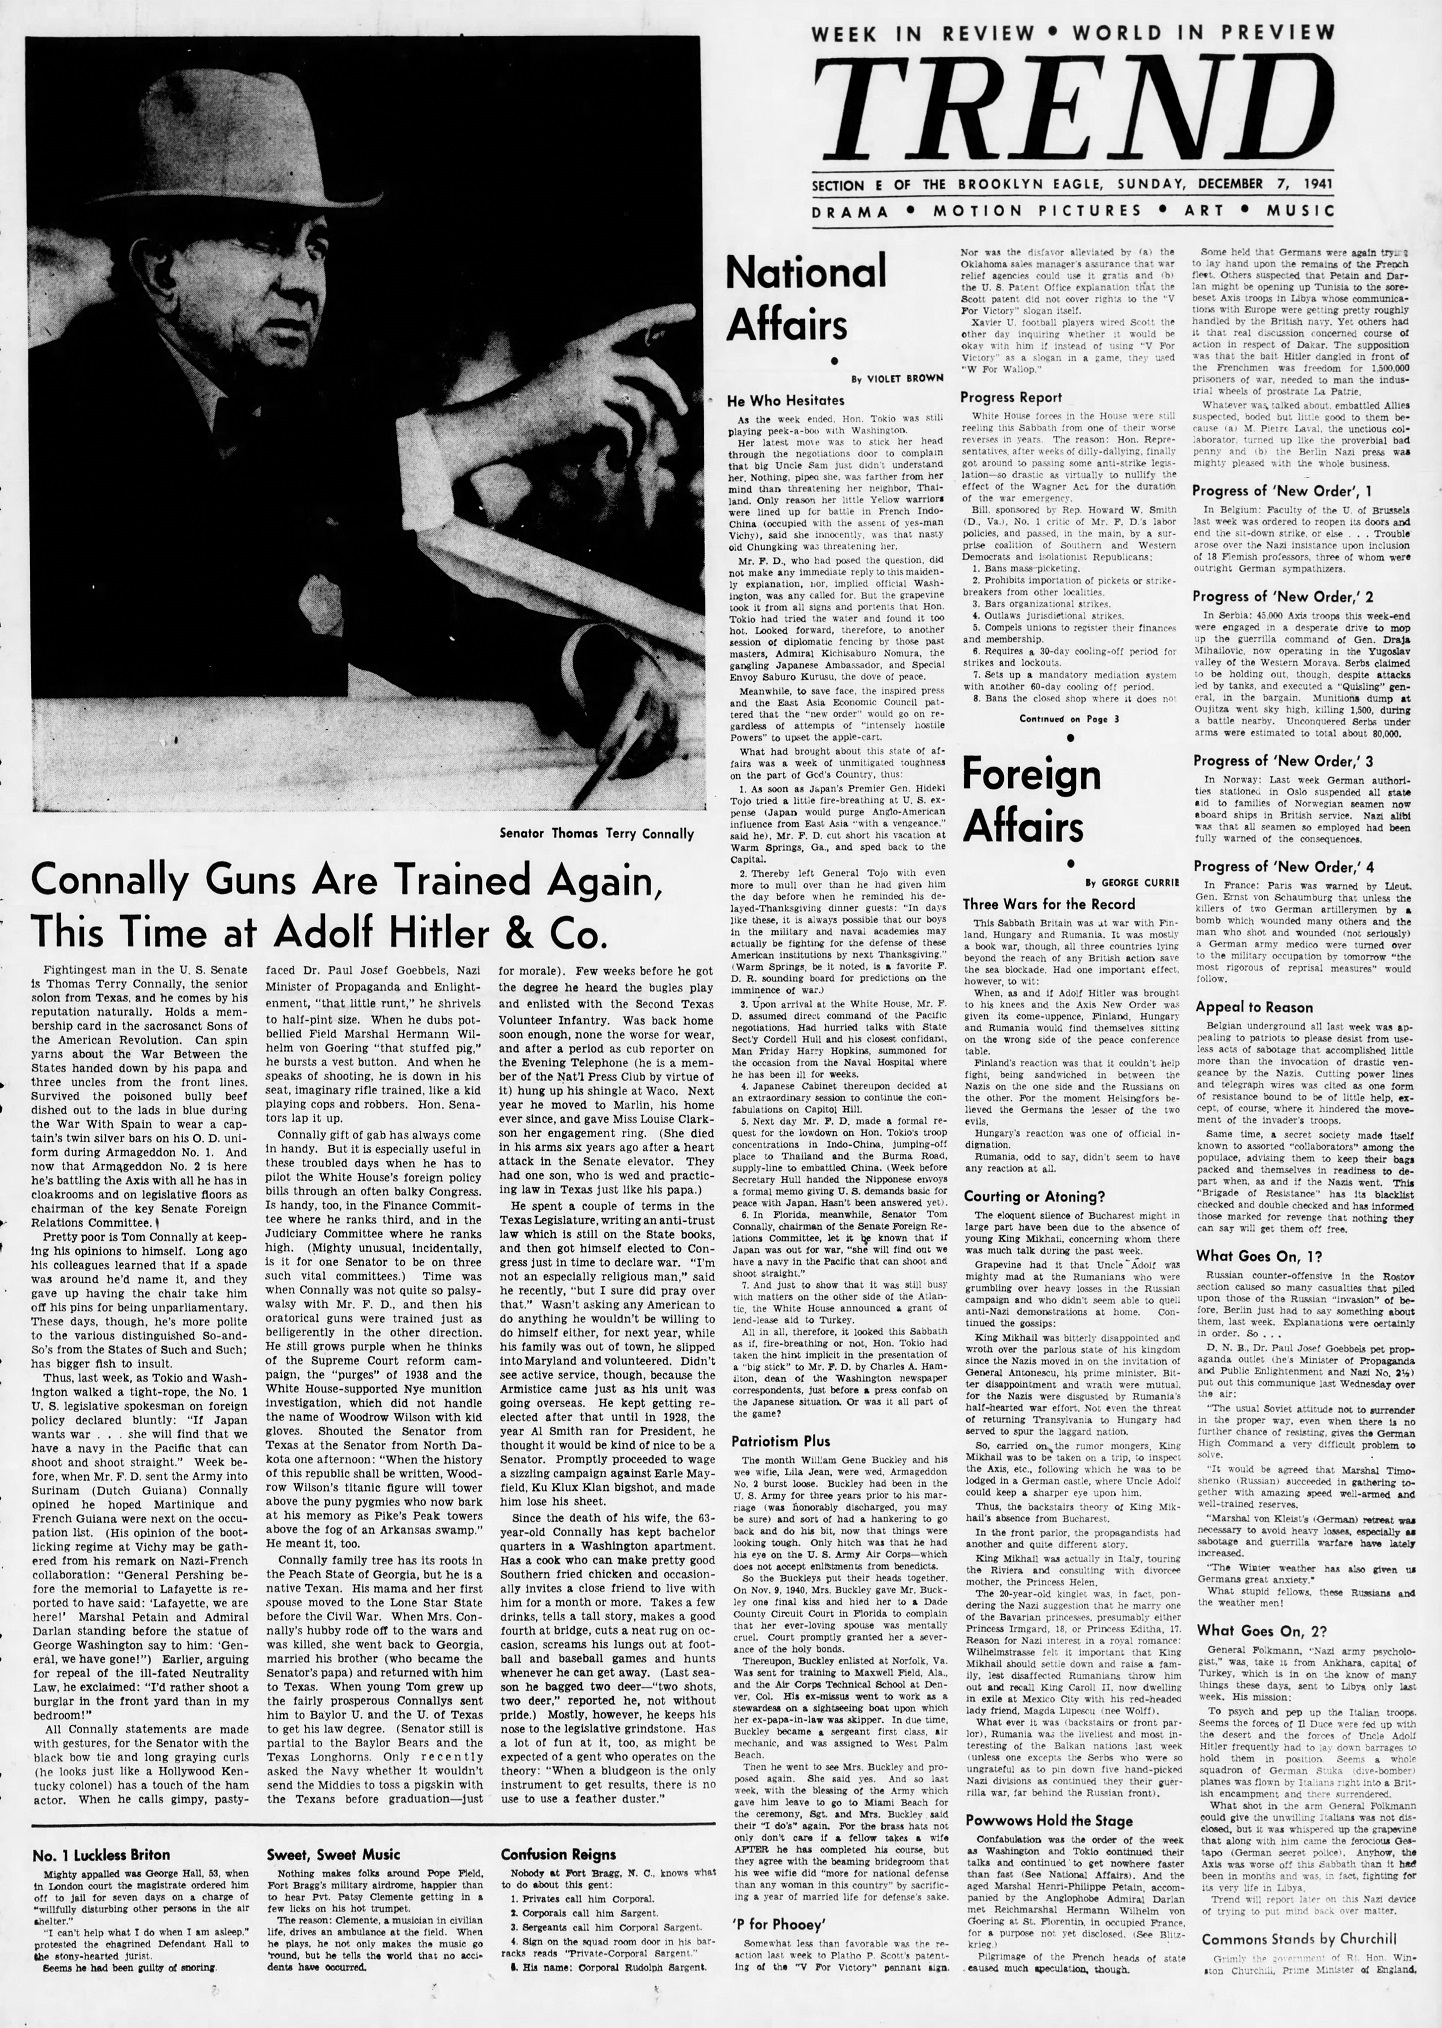 The_Brooklyn_Daily_Eagle_Sun__Dec_7__1941_(3).jpg